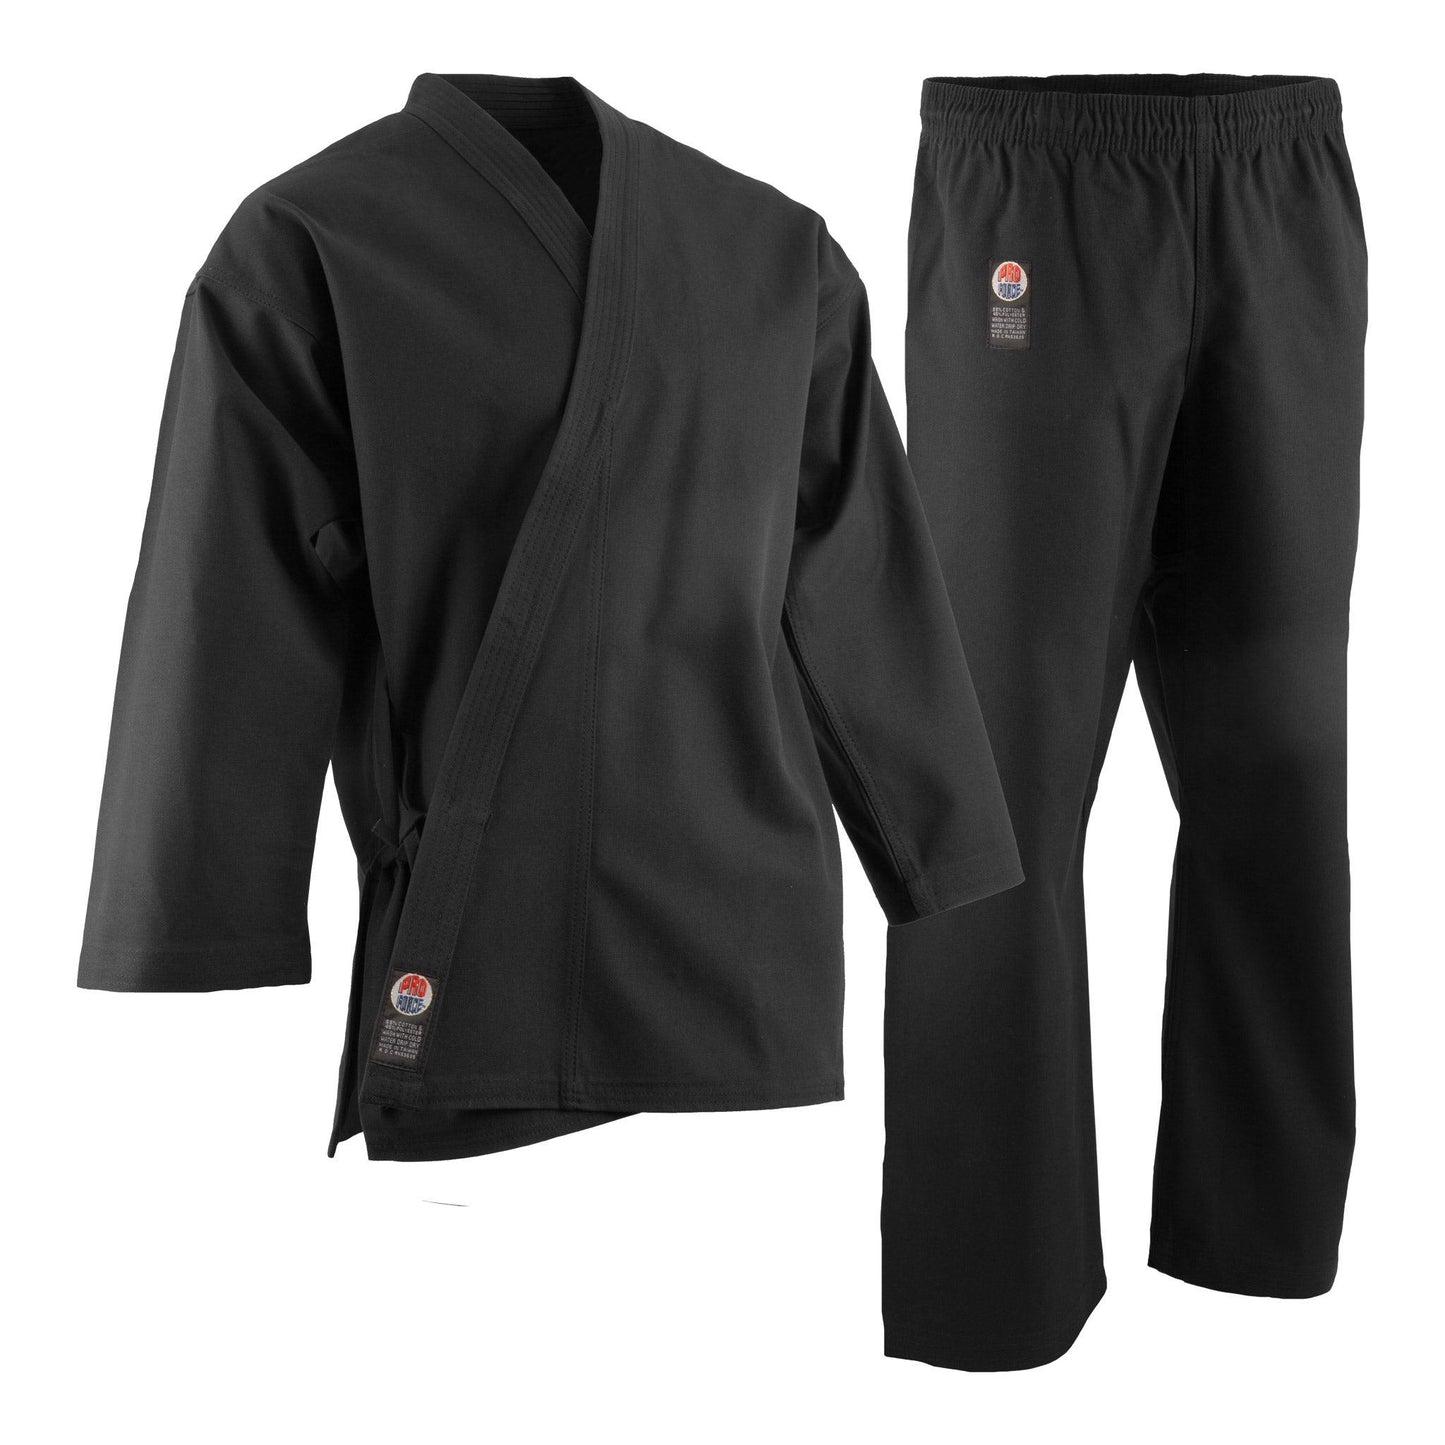 ProForce 10 oz. Karate Uniform (Elastic Drawstring) - 55/45 Blend - Violent Art Shop